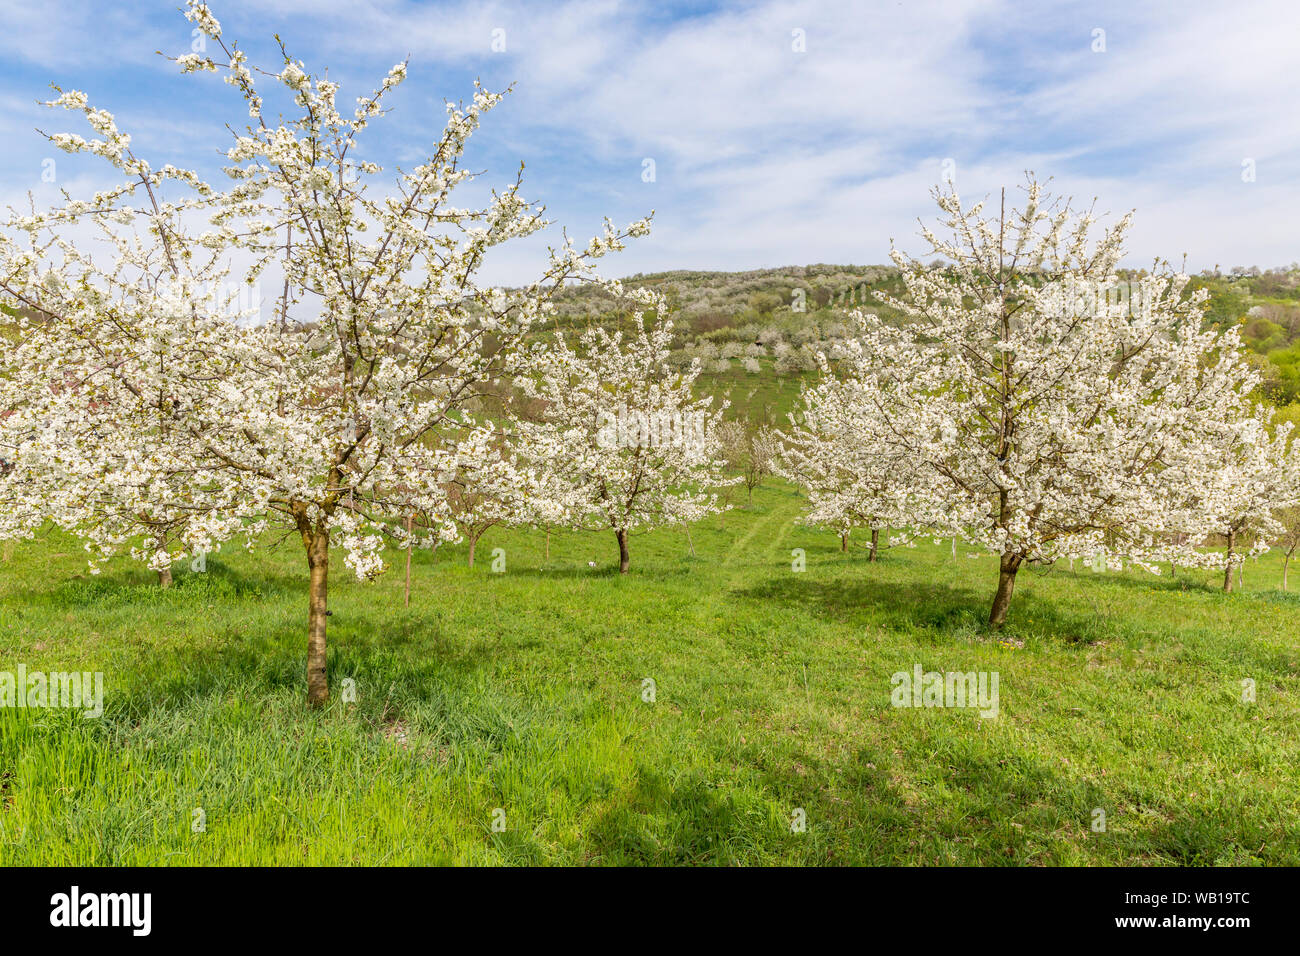 Rumania,Transylvania, flowering cherry trees Stock Photo